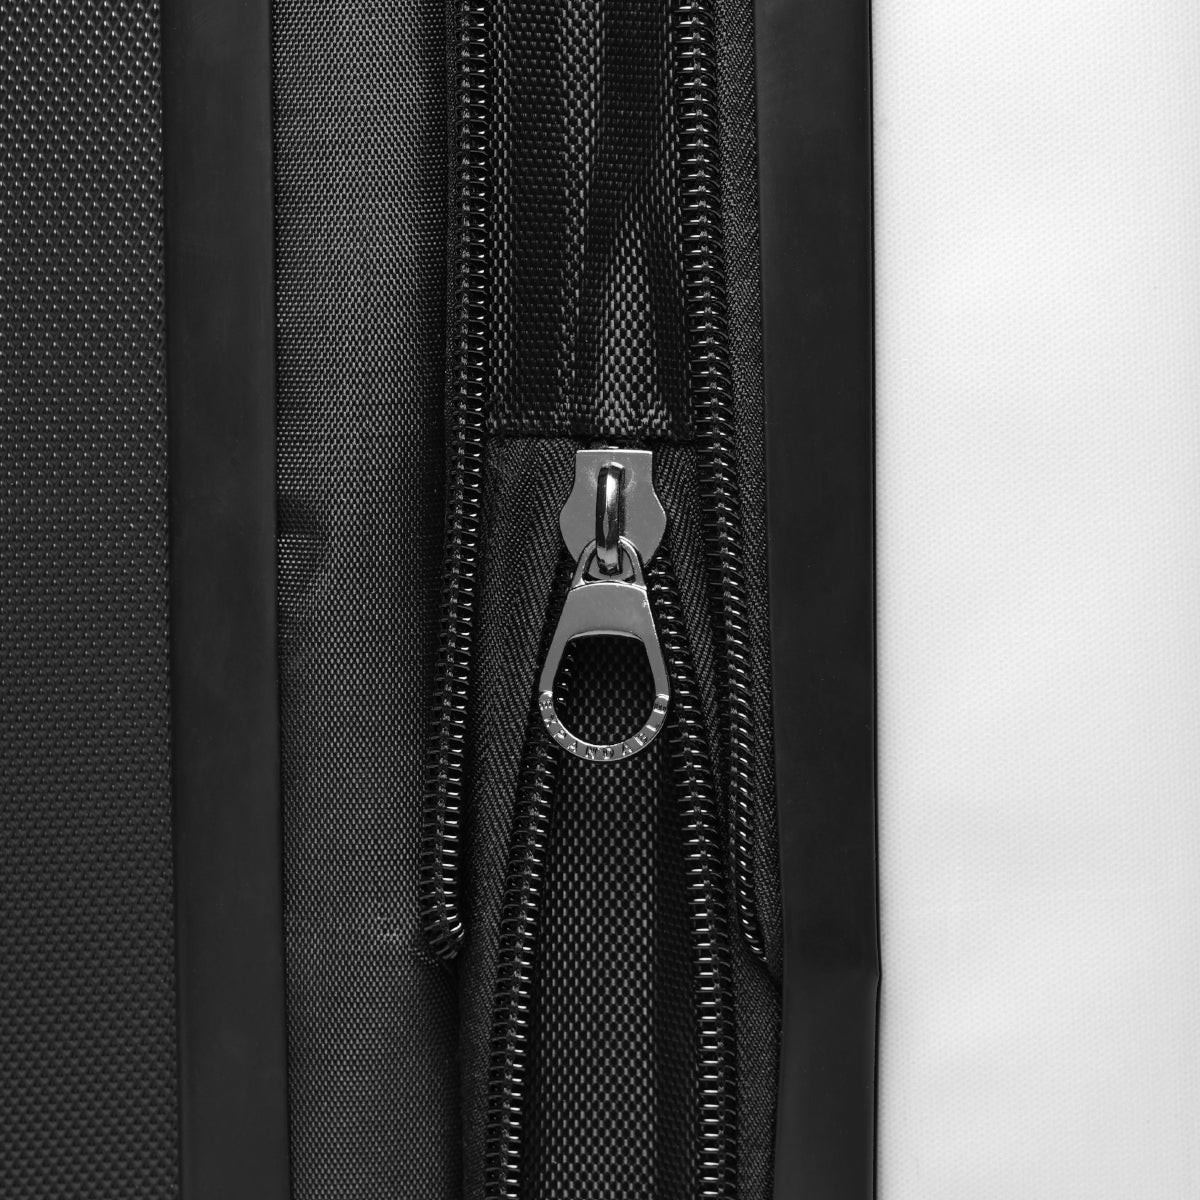 Getrott Chanellike Eddy Bogaert Graffiti Art Collection Black Cabin Suitcase Inner Pockets Extended Storage Adjustable Telescopic Handle Inner Pockets Double wheeled Polycarbonate Hard-shell Built-in Lock